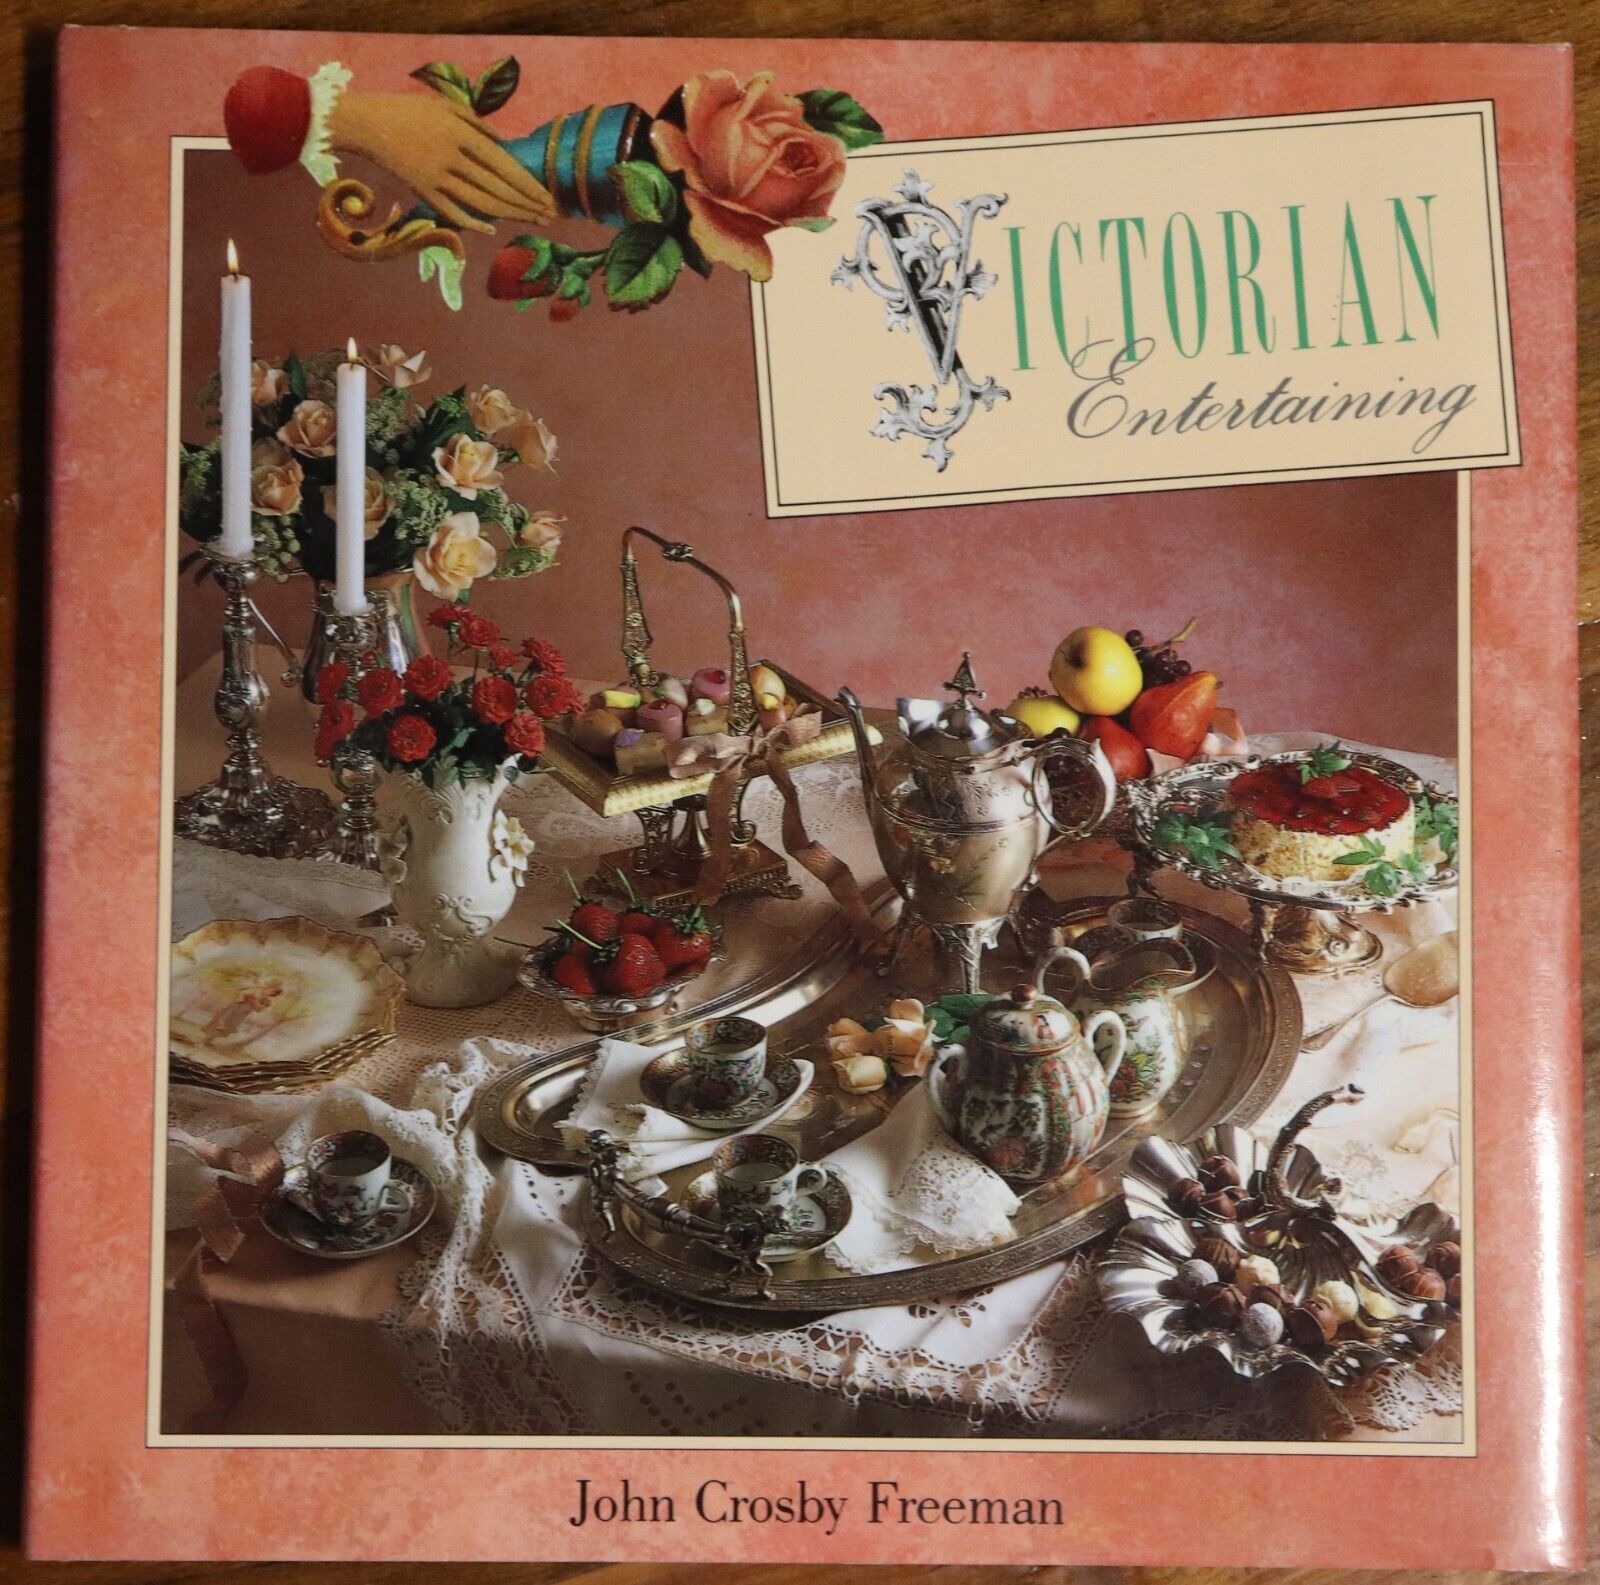 Victorian Entertaining - 1990 - Home Entertaining Victorian Era Reference Book